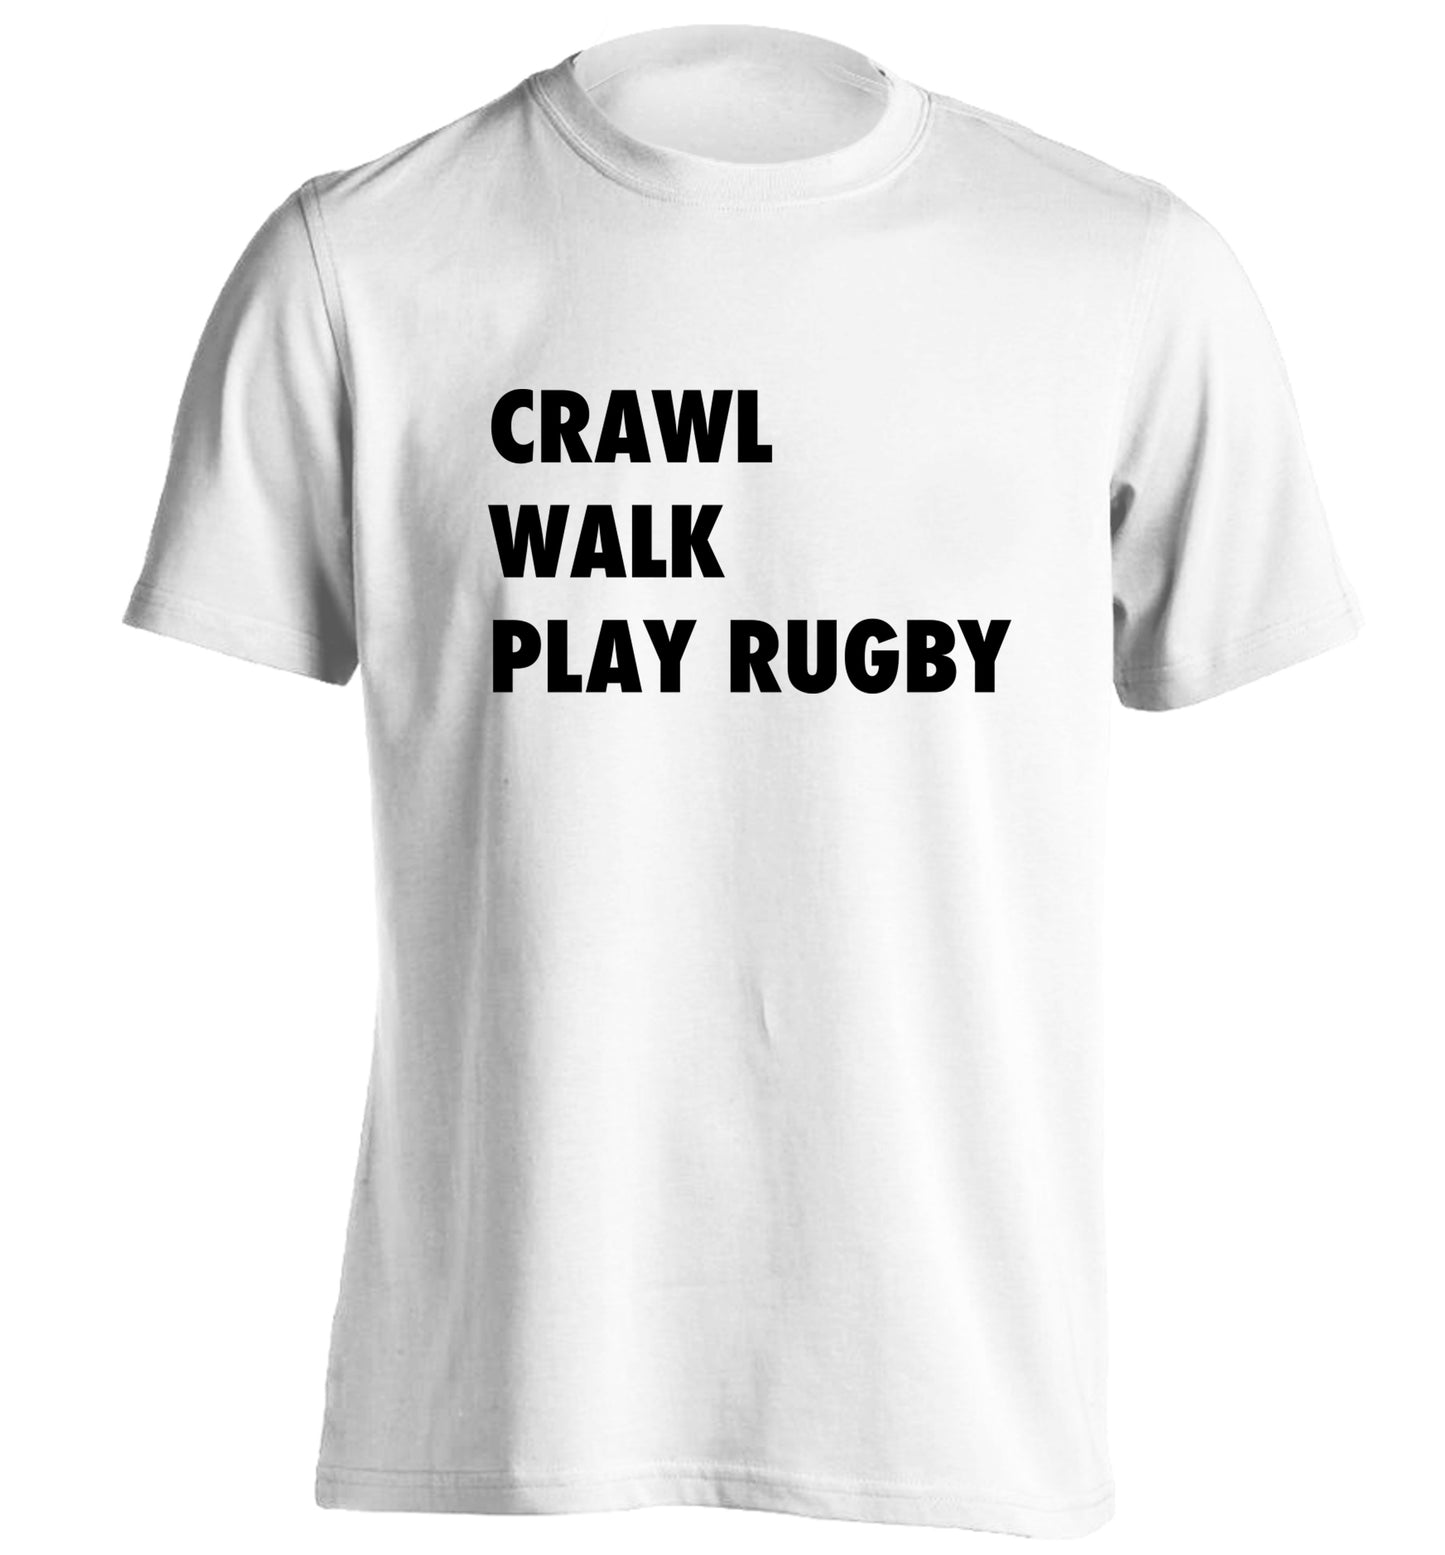 Eat, sleep, play rugby adults unisex white Tshirt 2XL